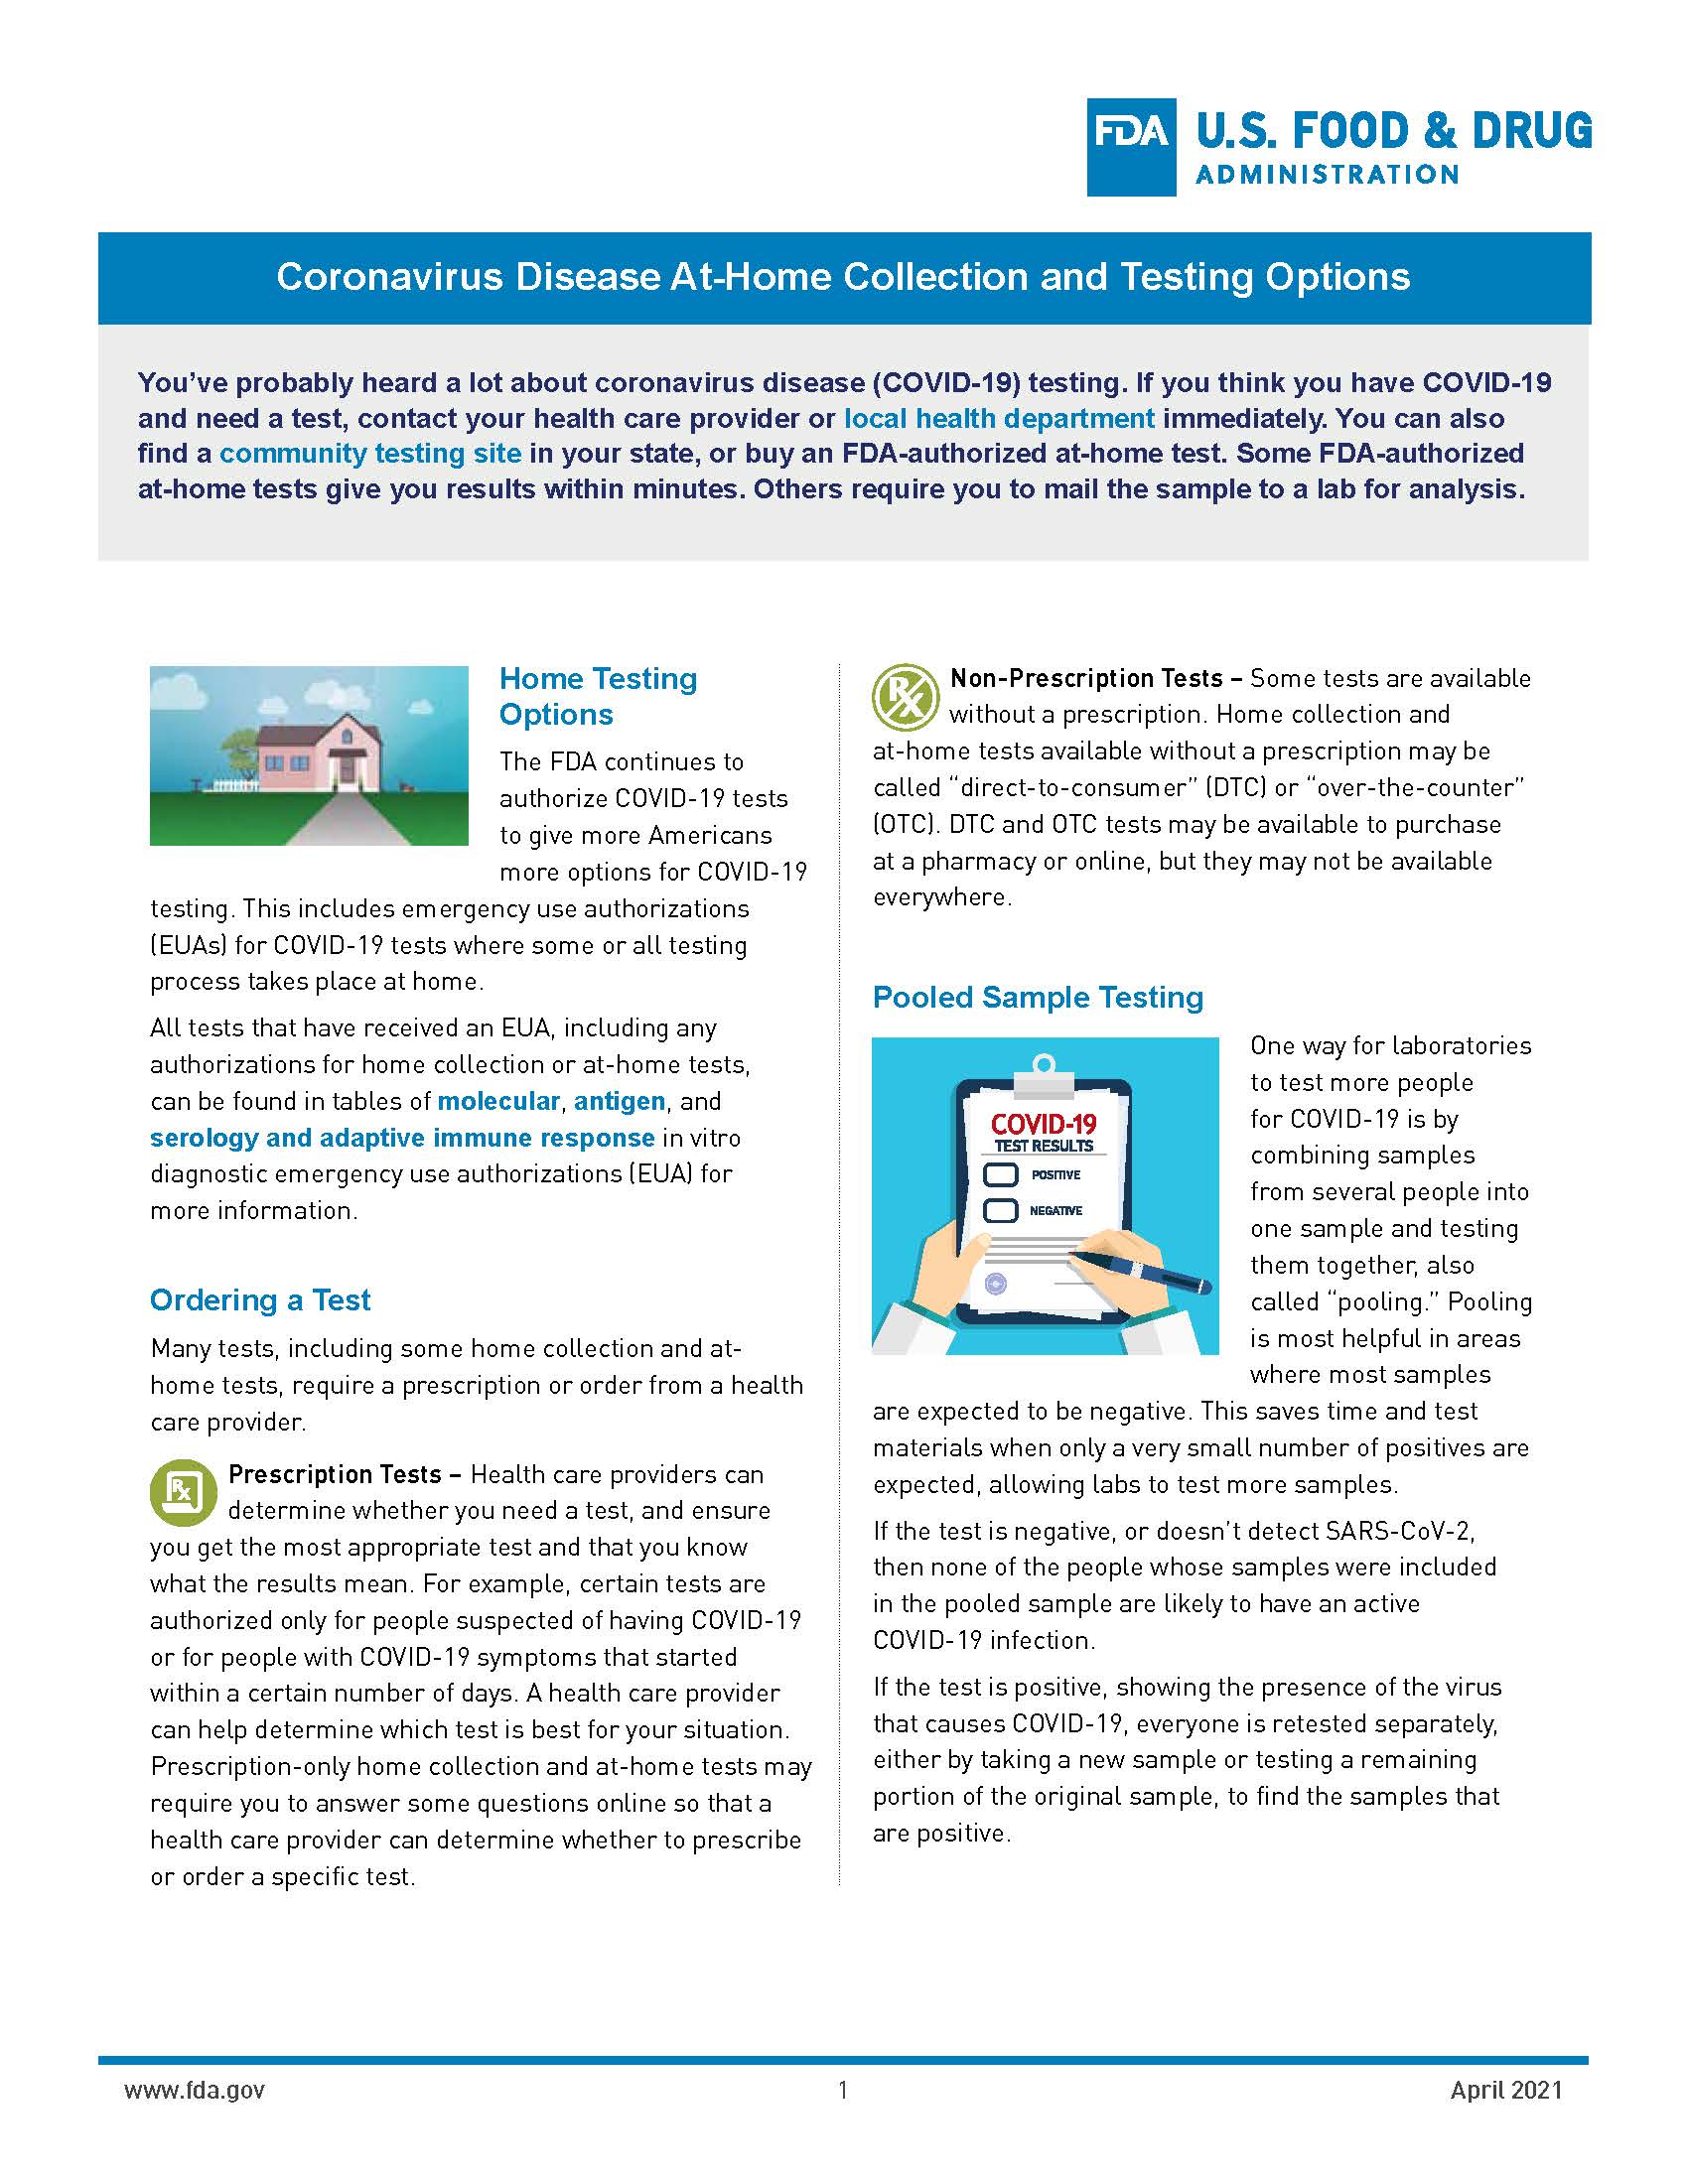 Link to 508 compliant coronavirus at-home testing options PDF